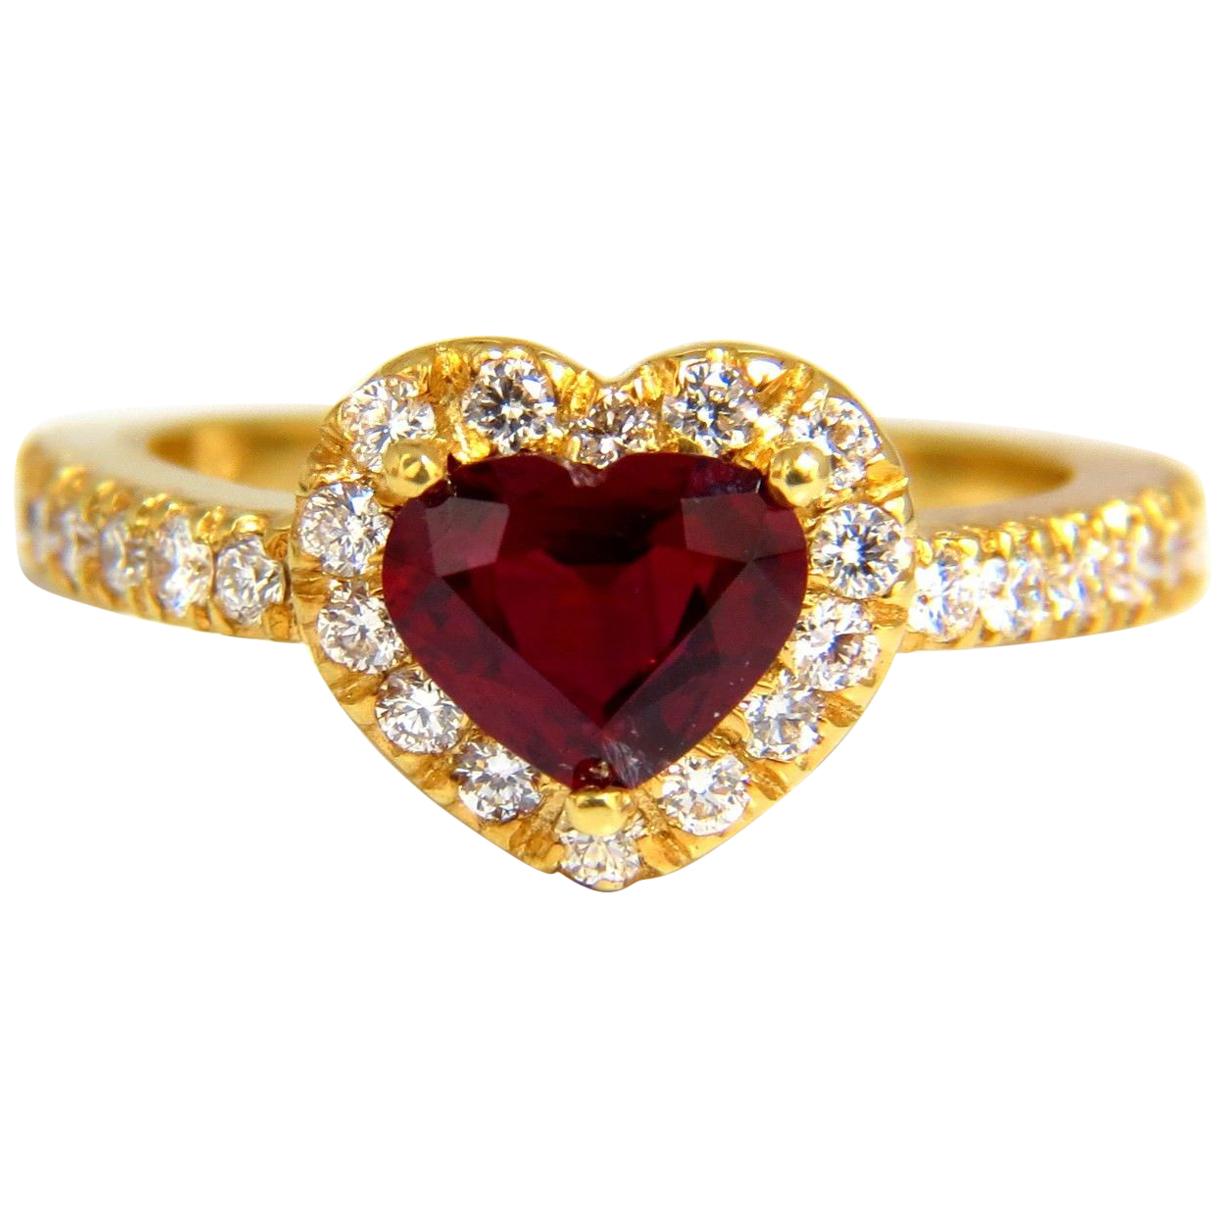 GIL Certified 1.62 Carat Natural Heart Cut Ruby Diamonds Ring 14 Karat